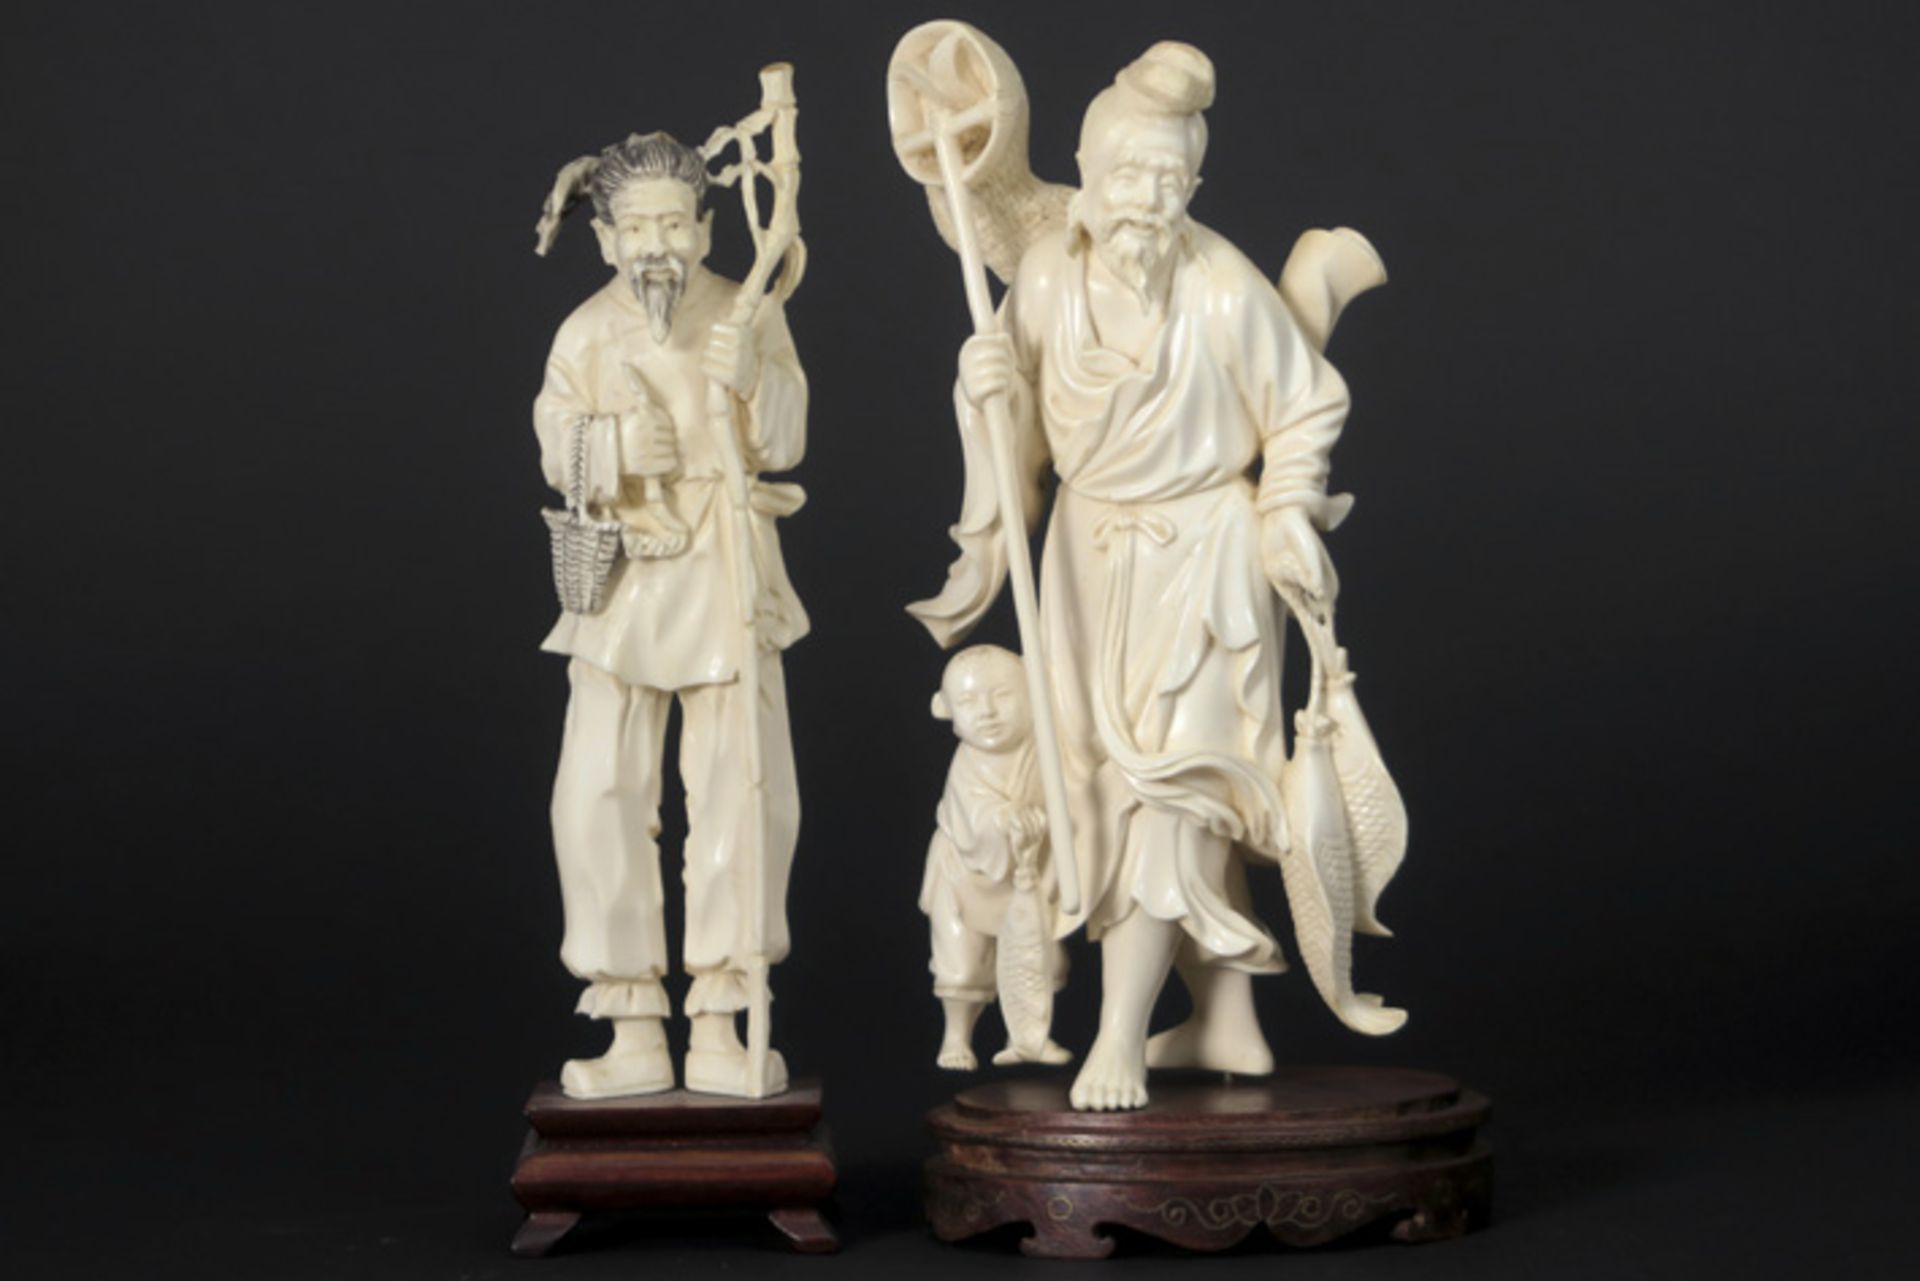 Lot van twee Chinese sculpturen in ivoor : "Man met staf" en "Visser met kind" - hoogtes : 18 en